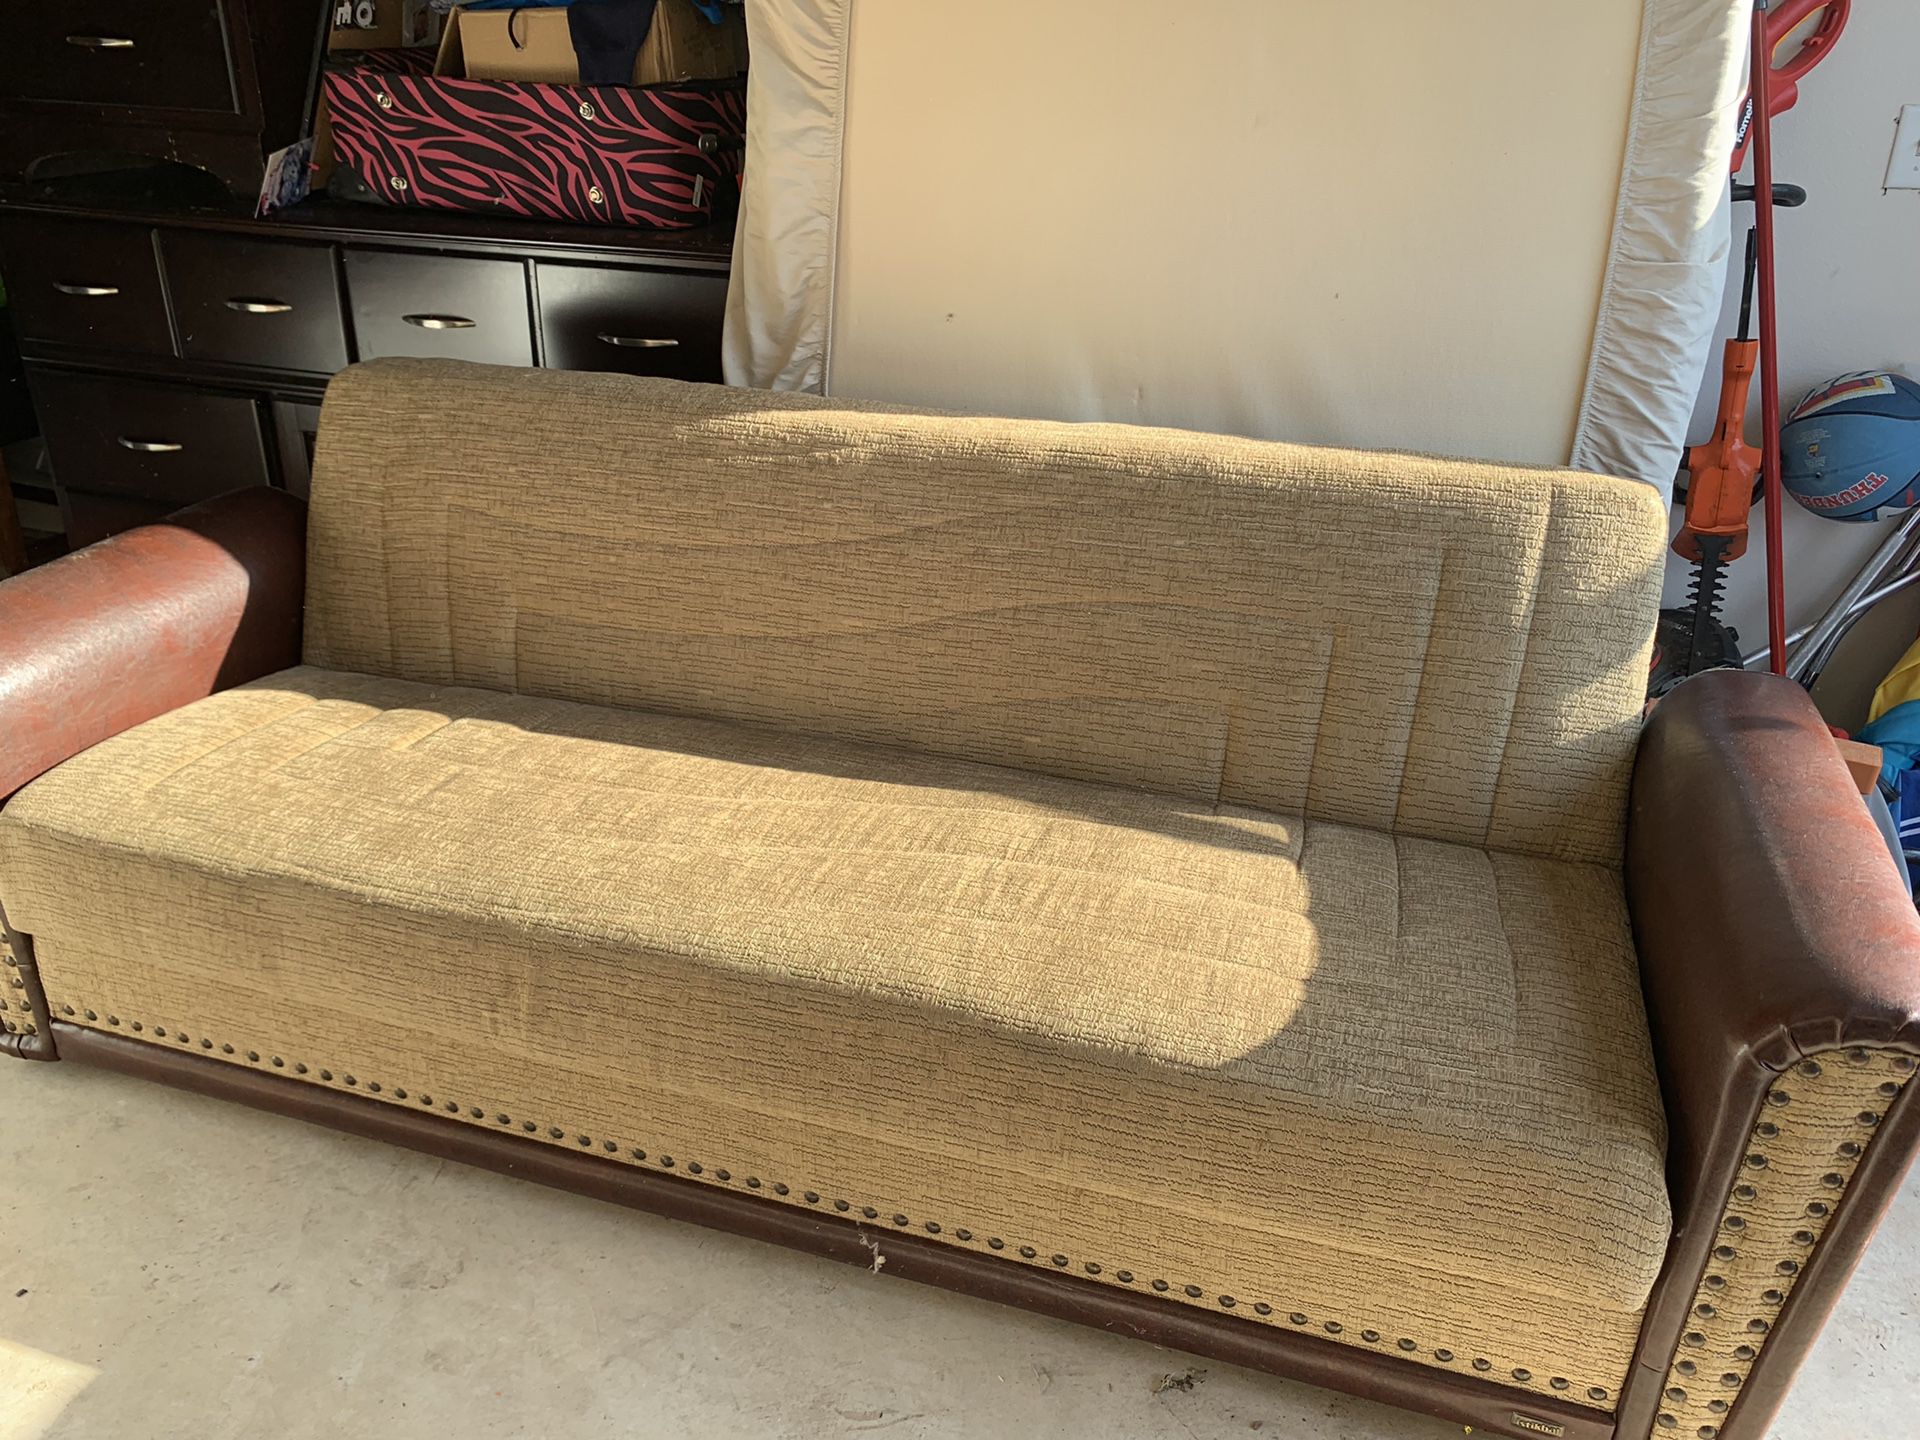 New sofa bed/Futon with storage unit